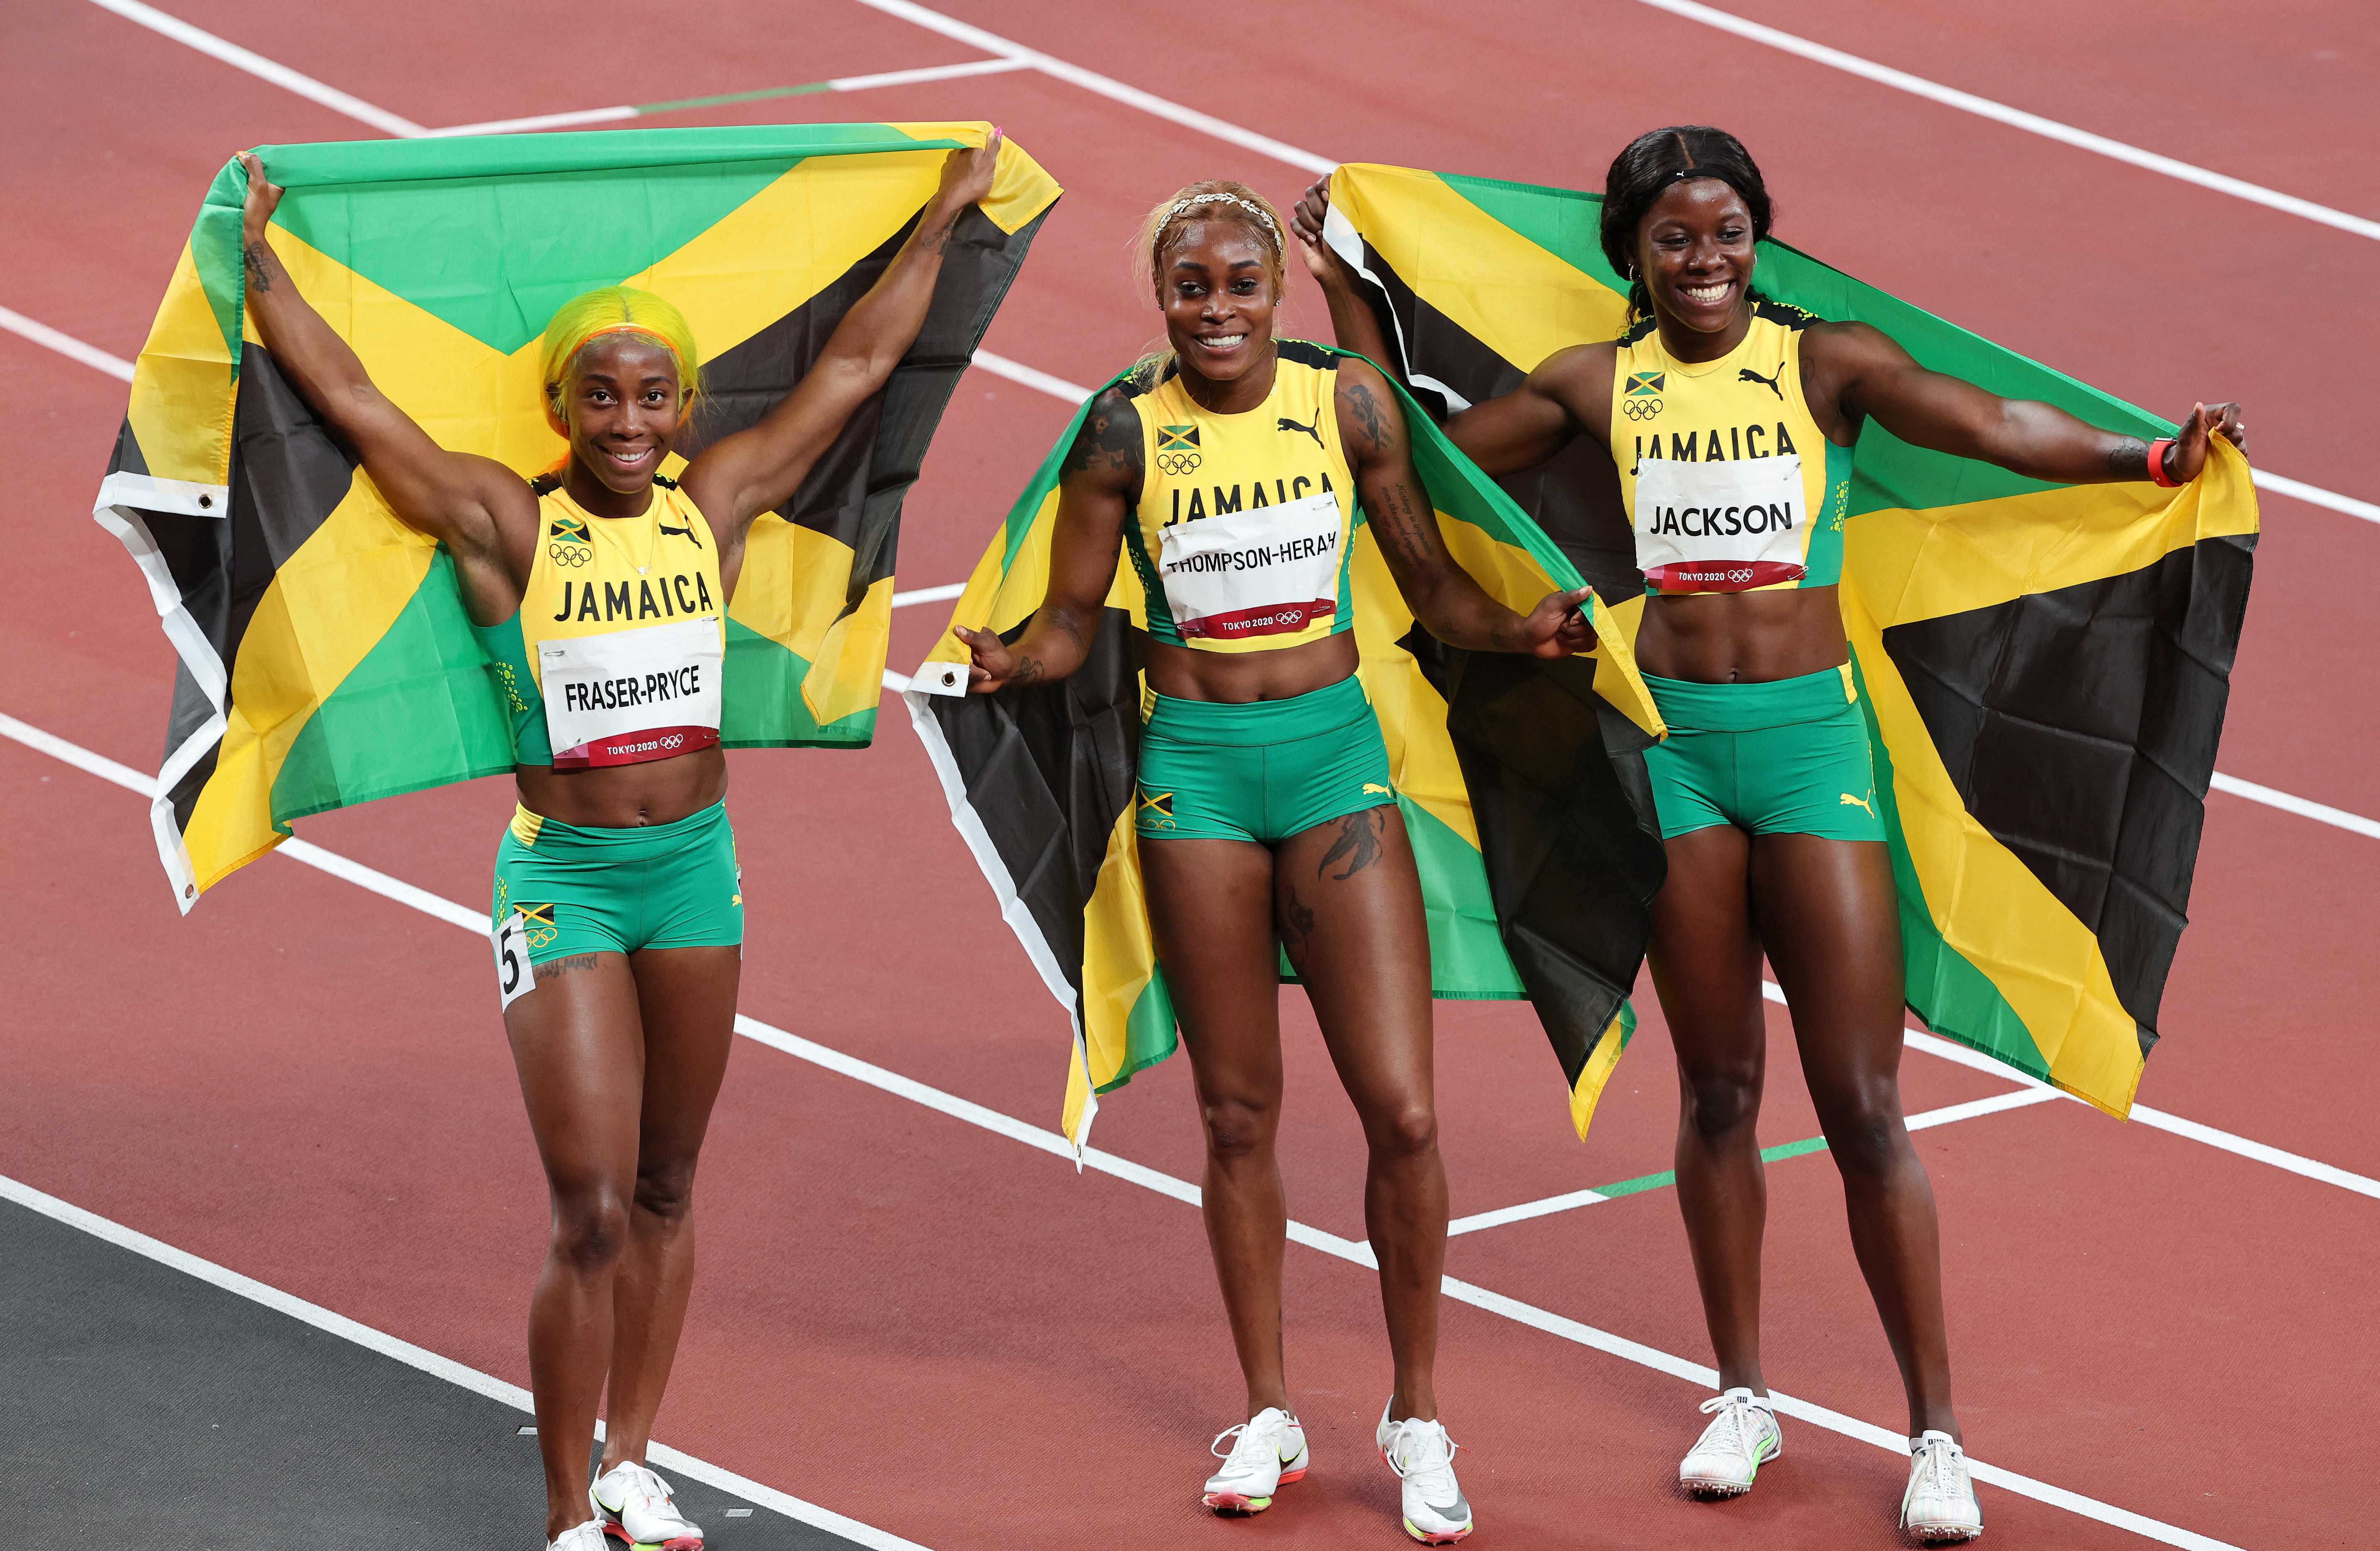 Las jamaiquinas Shelly-Ann Fraser-Pryce, Elaine Thompson-Herah and Shericka Jackson posan para una foto grupal luego de la prueba femenina de 100m final. (Foto Prensa Libre: AFP)